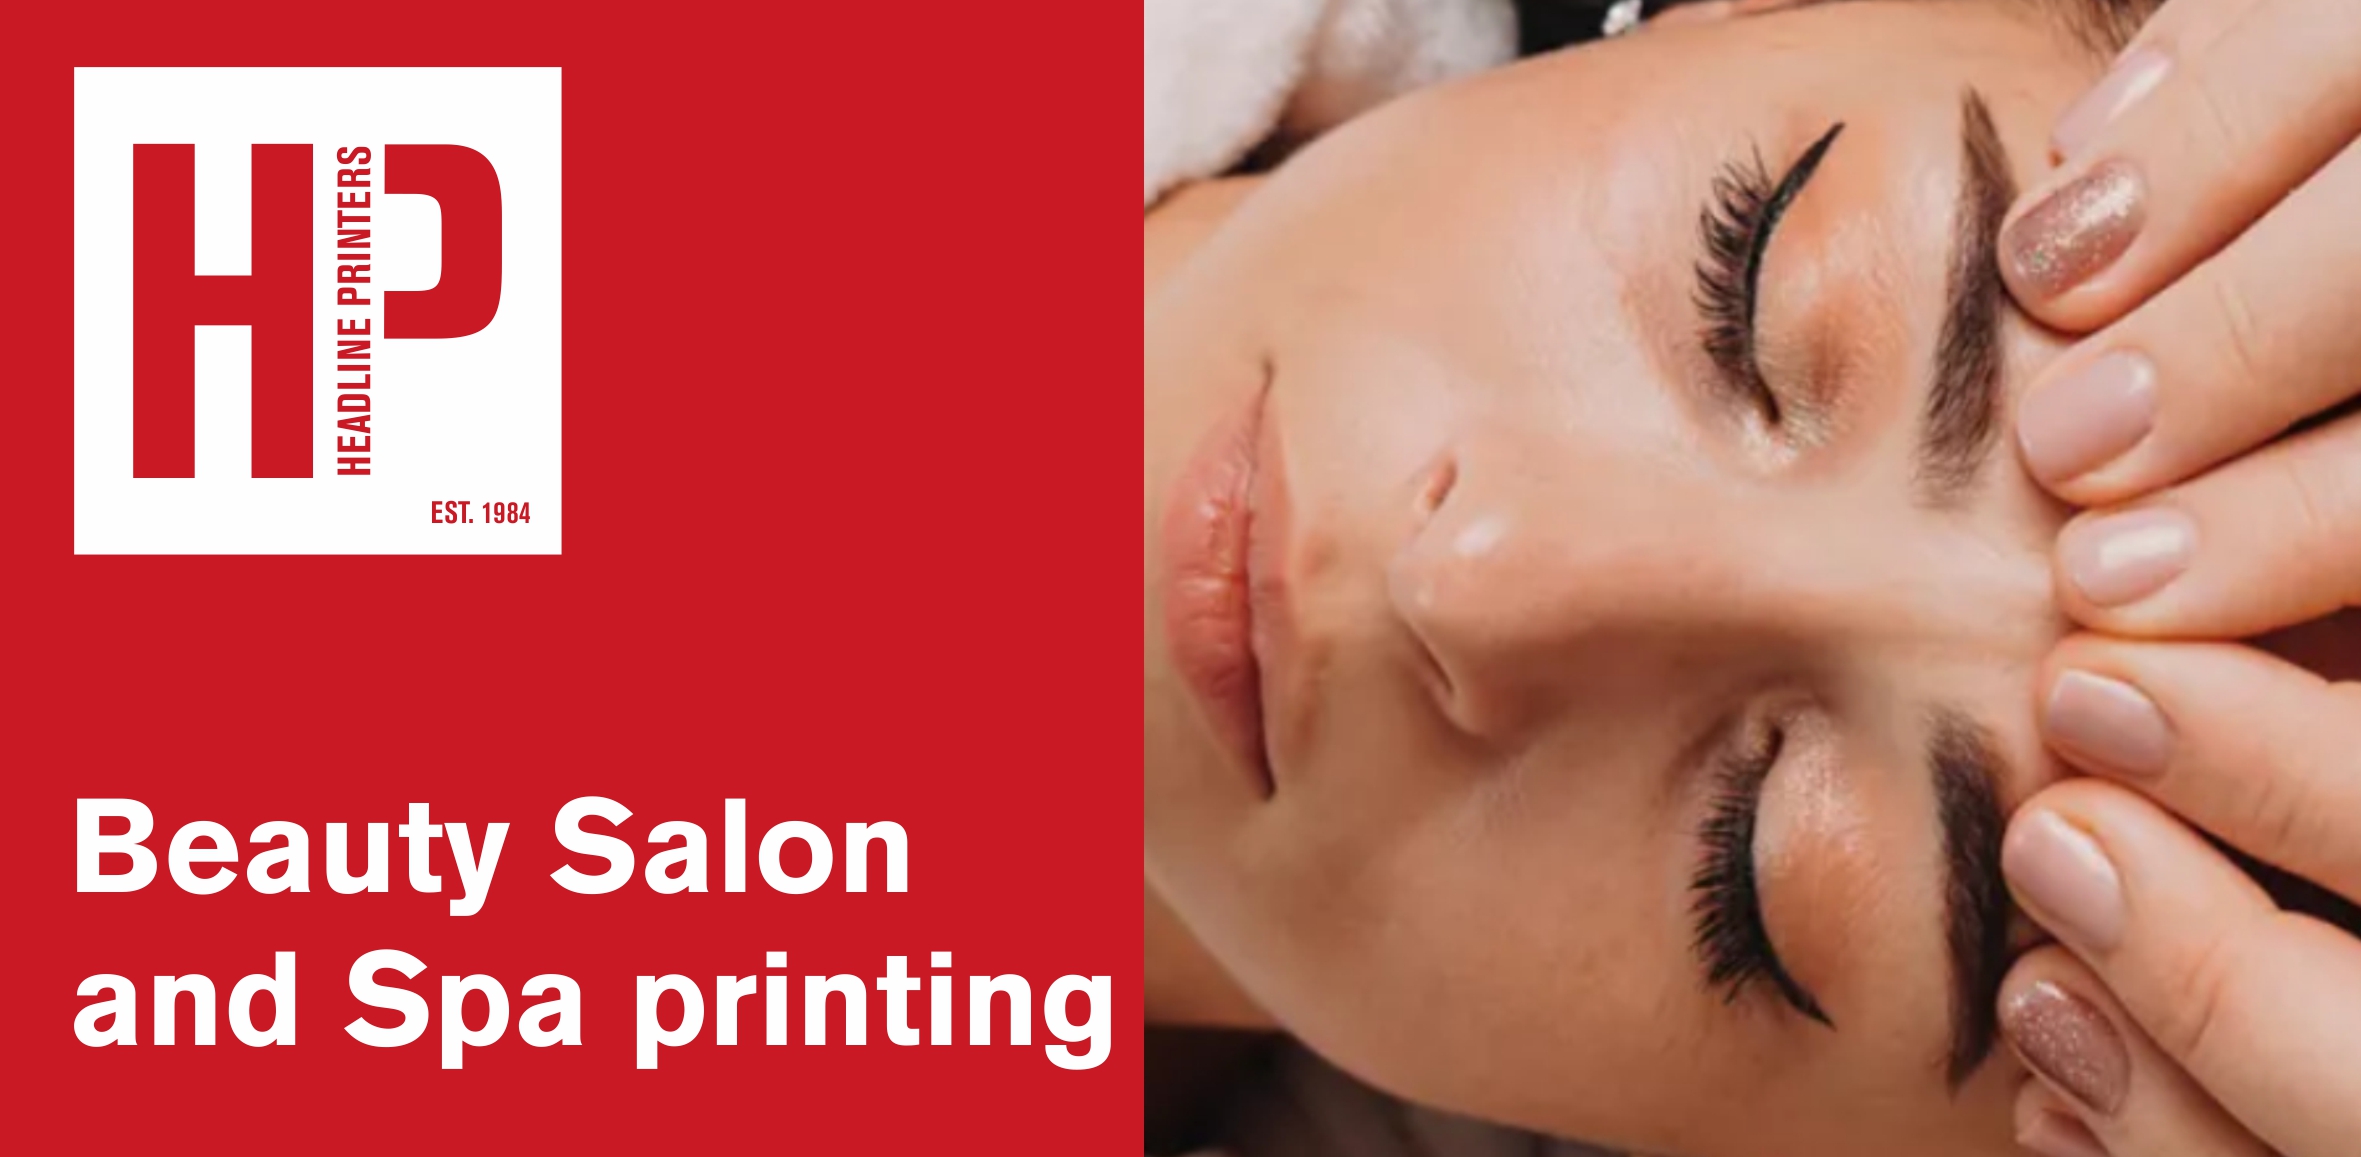 Beauty salon and spa printing